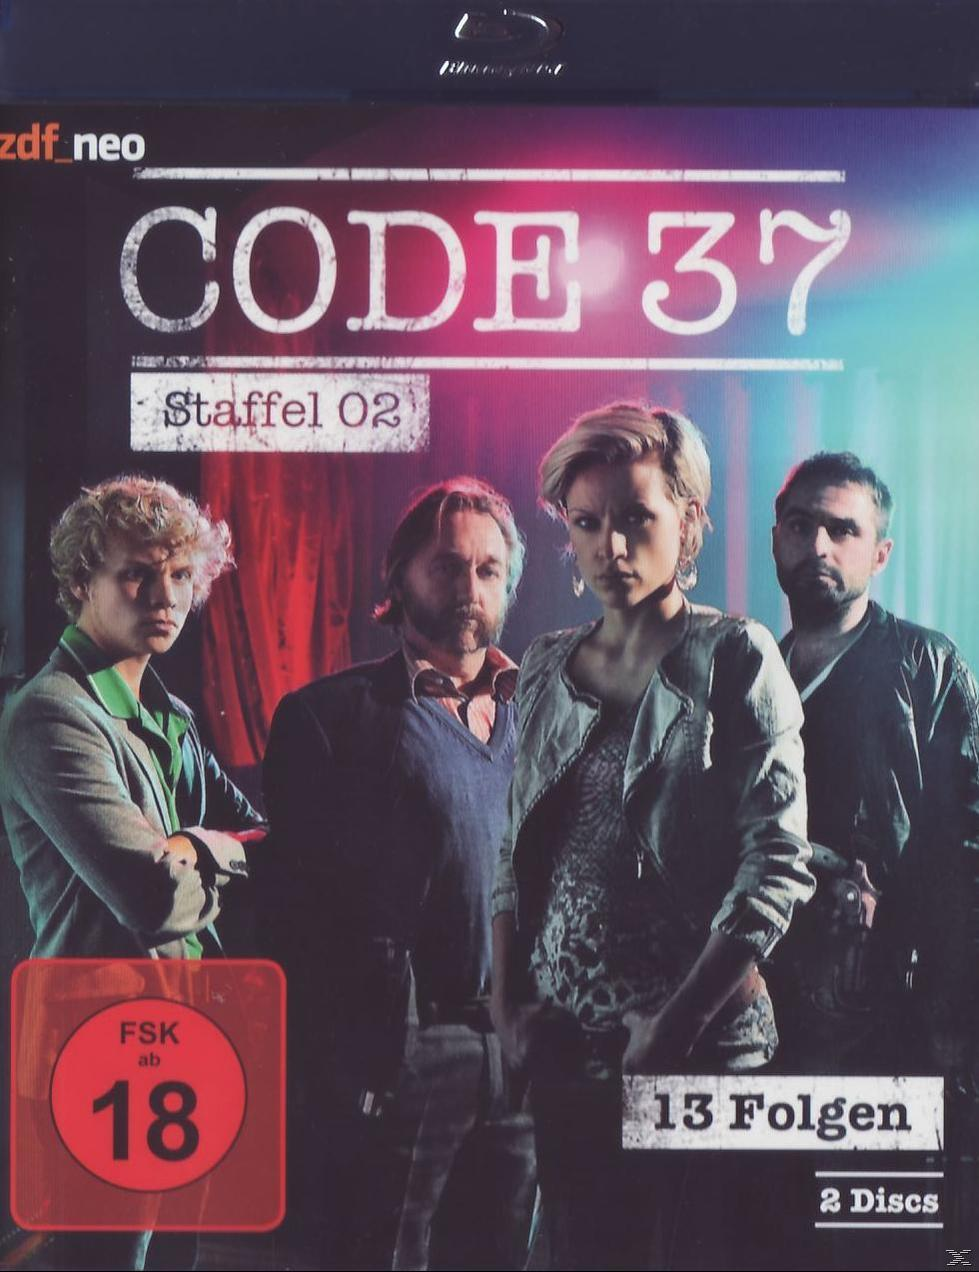 Code 37 2 Blu-ray - Staffel